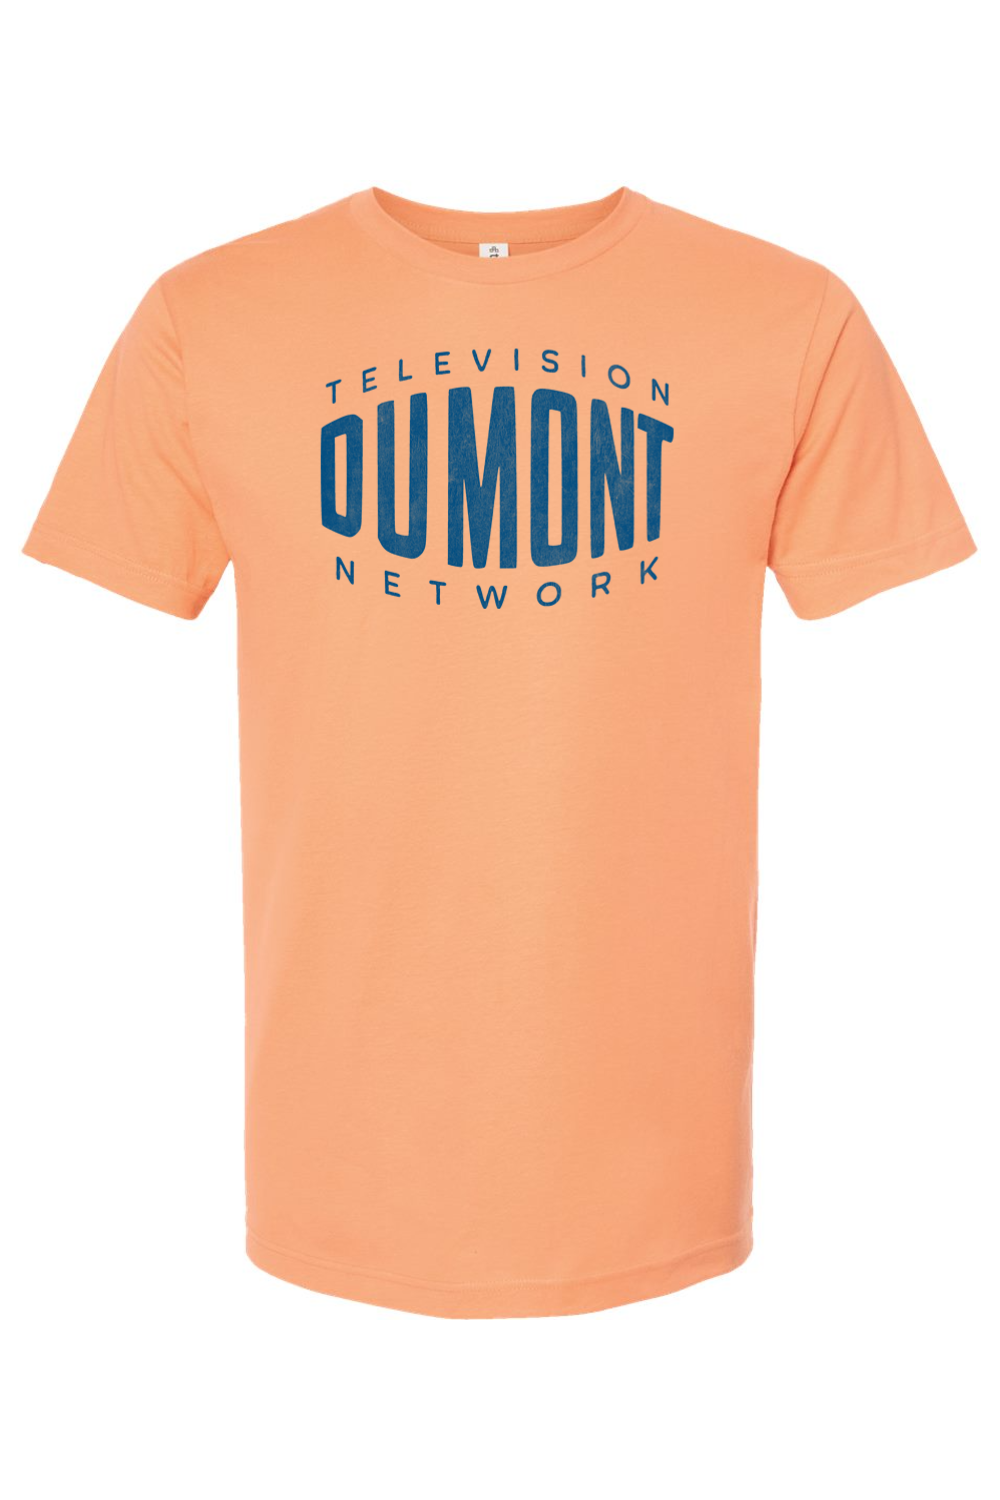 Dumont Television Network - Yinzylvania